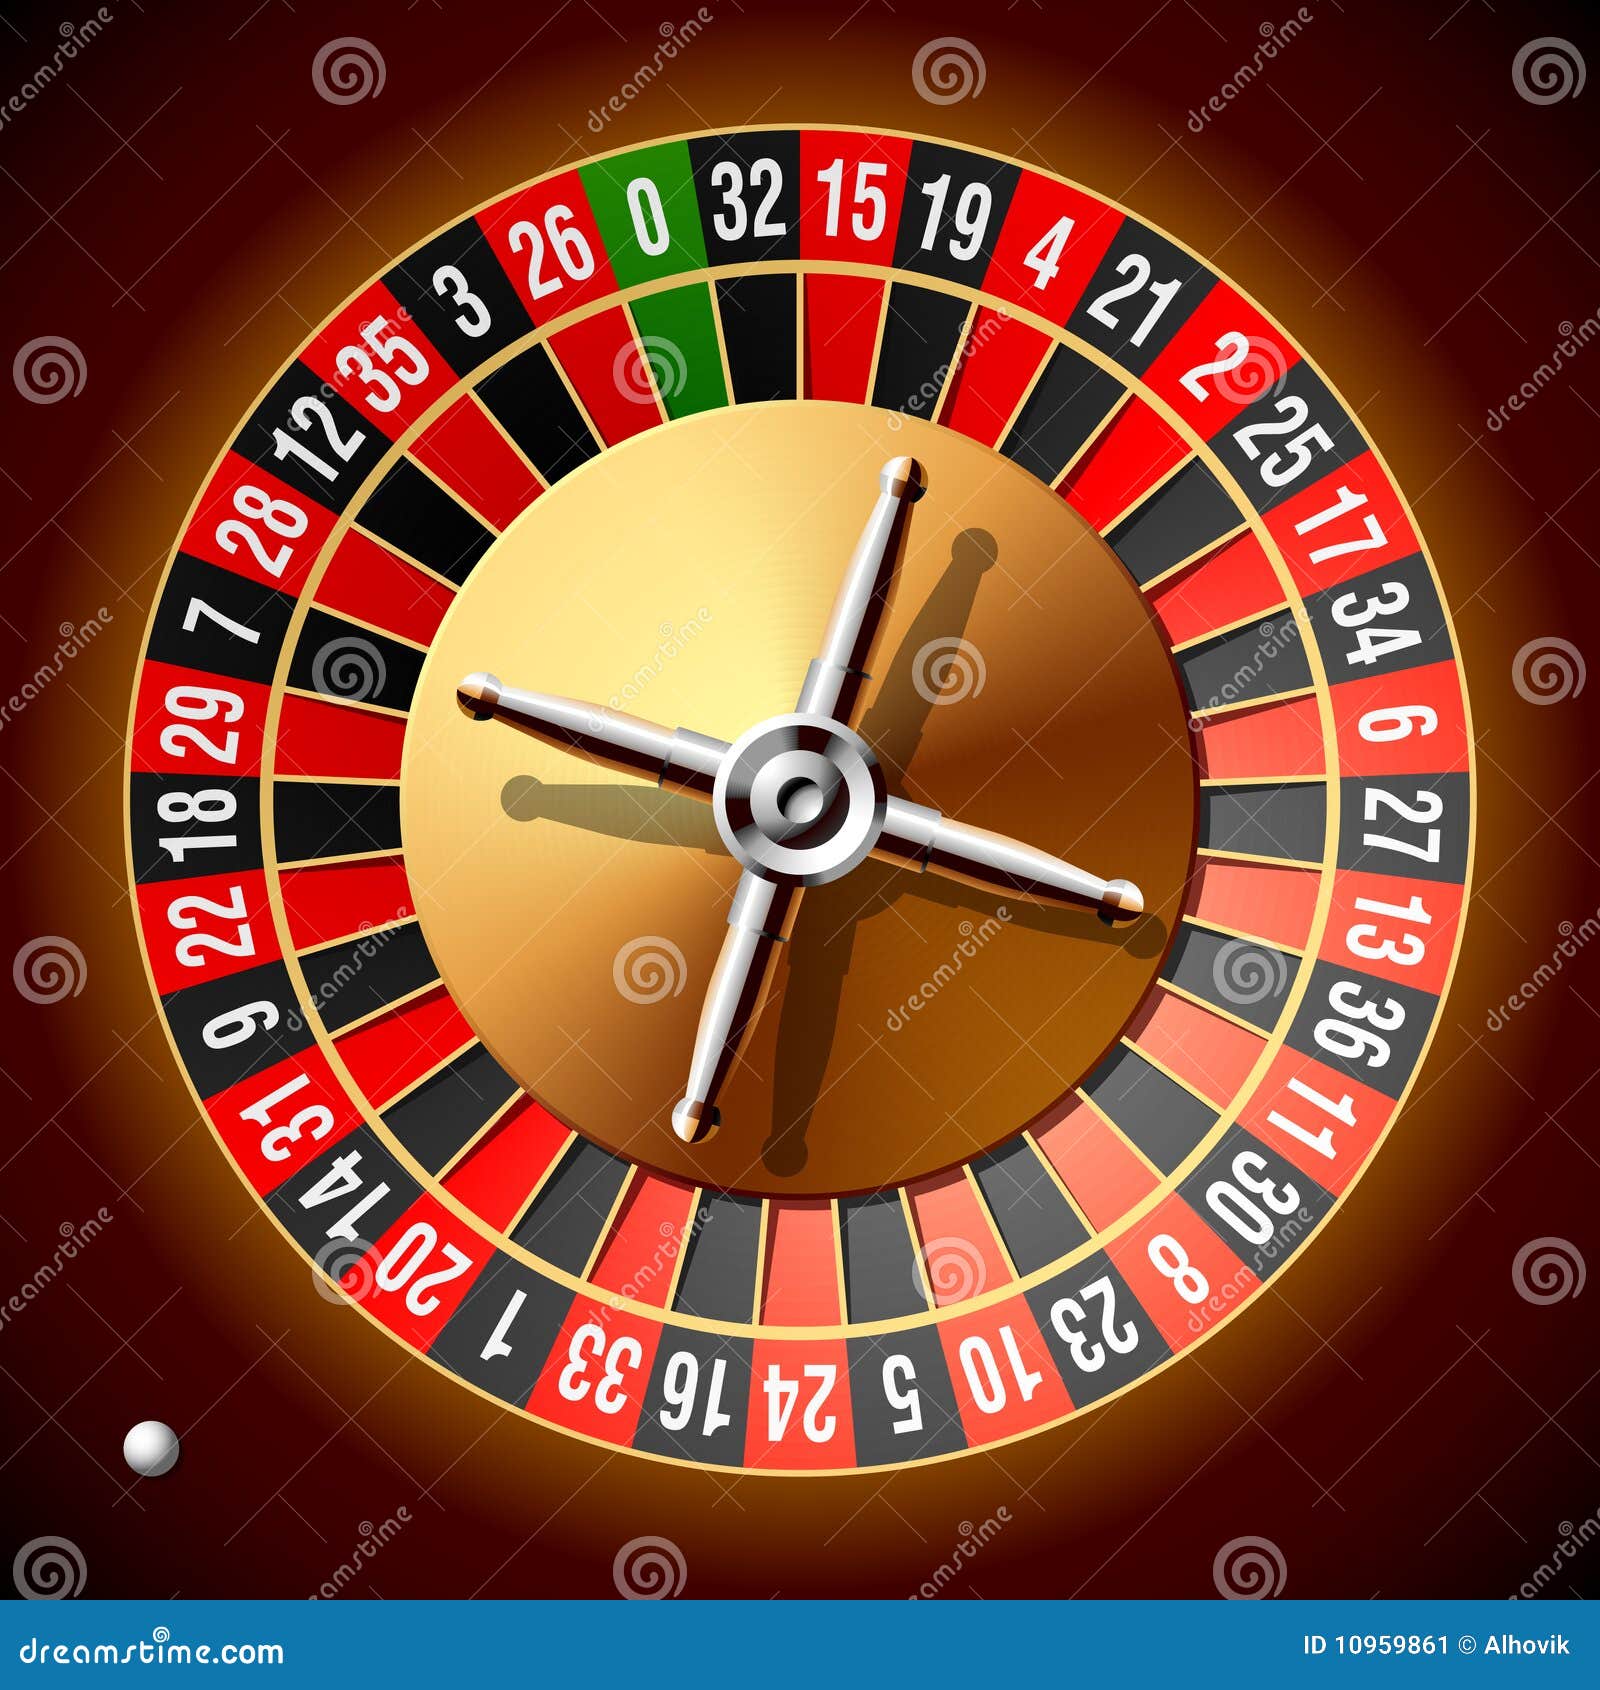 Unibet Portugal ruletas de casinos 843056